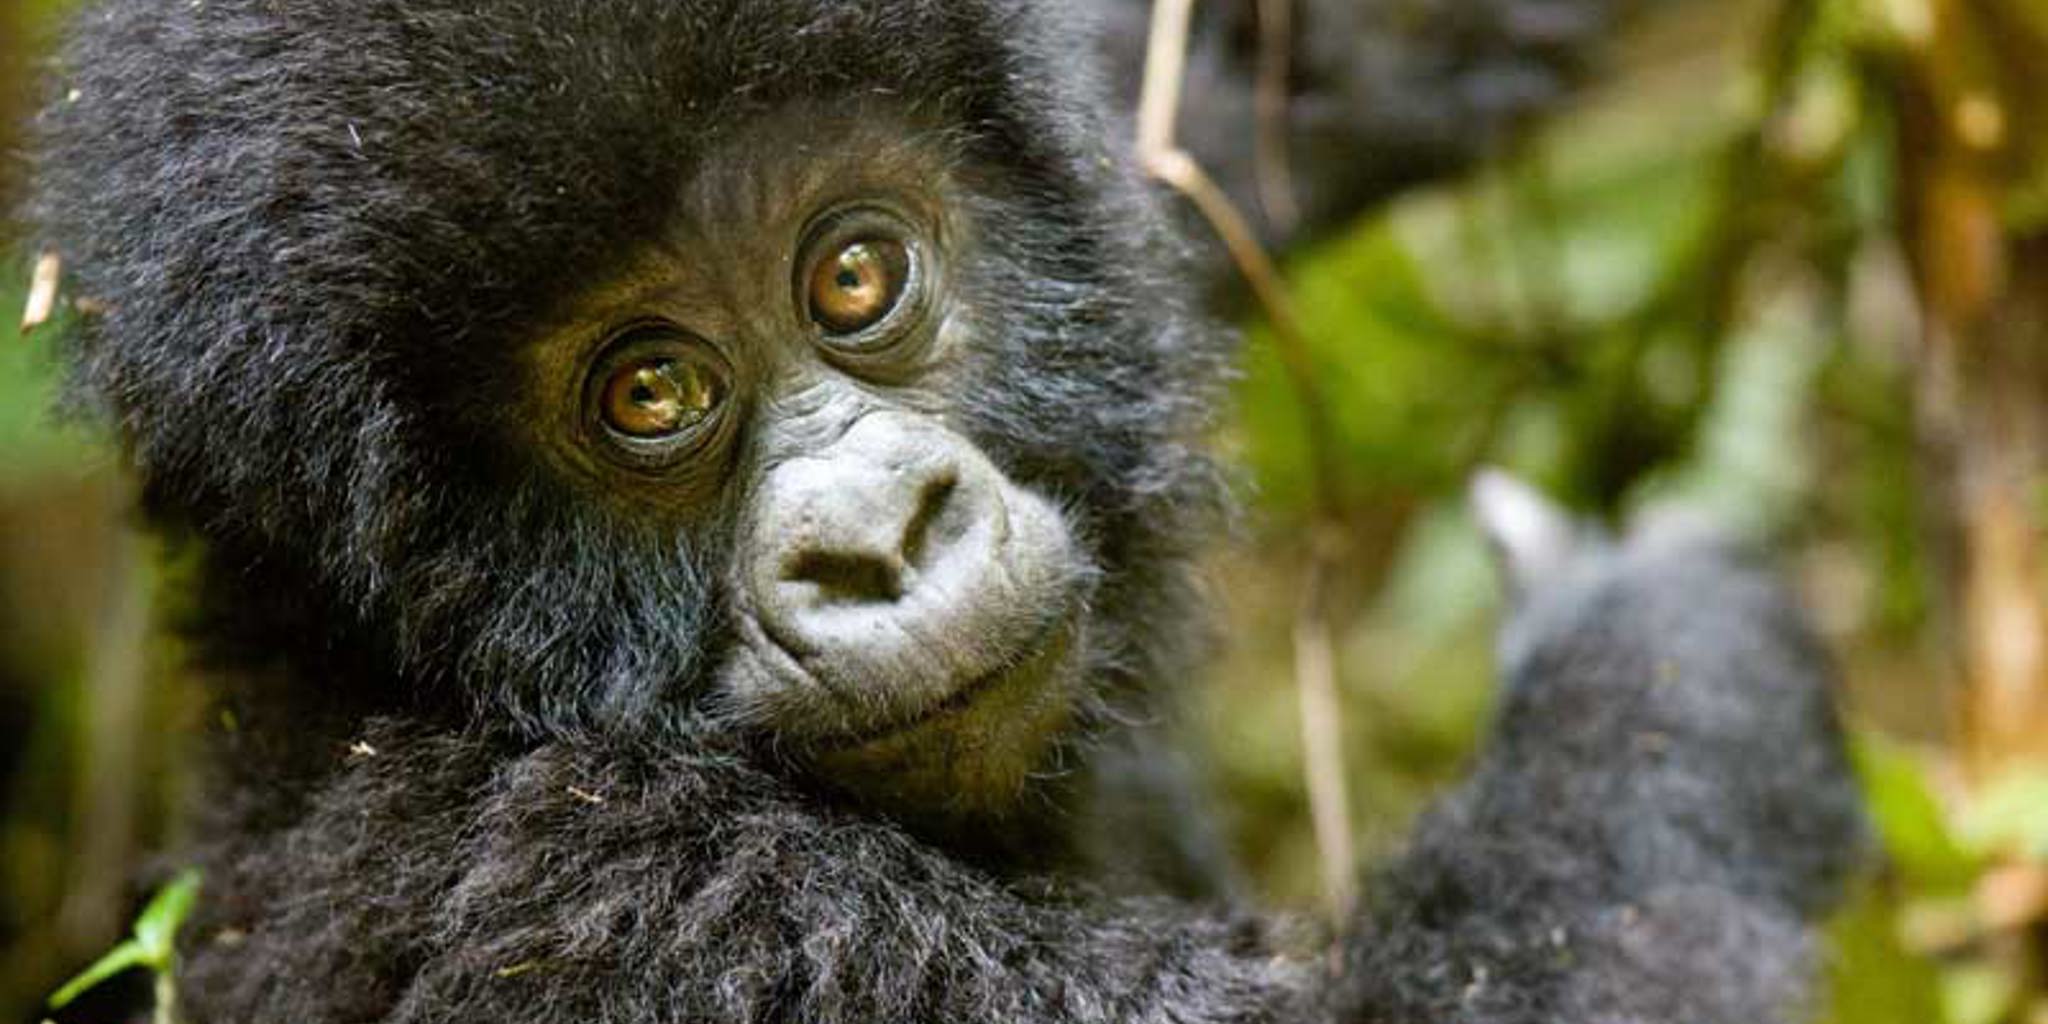 baby gorilla, volcanoes national park, Rwanda safaris